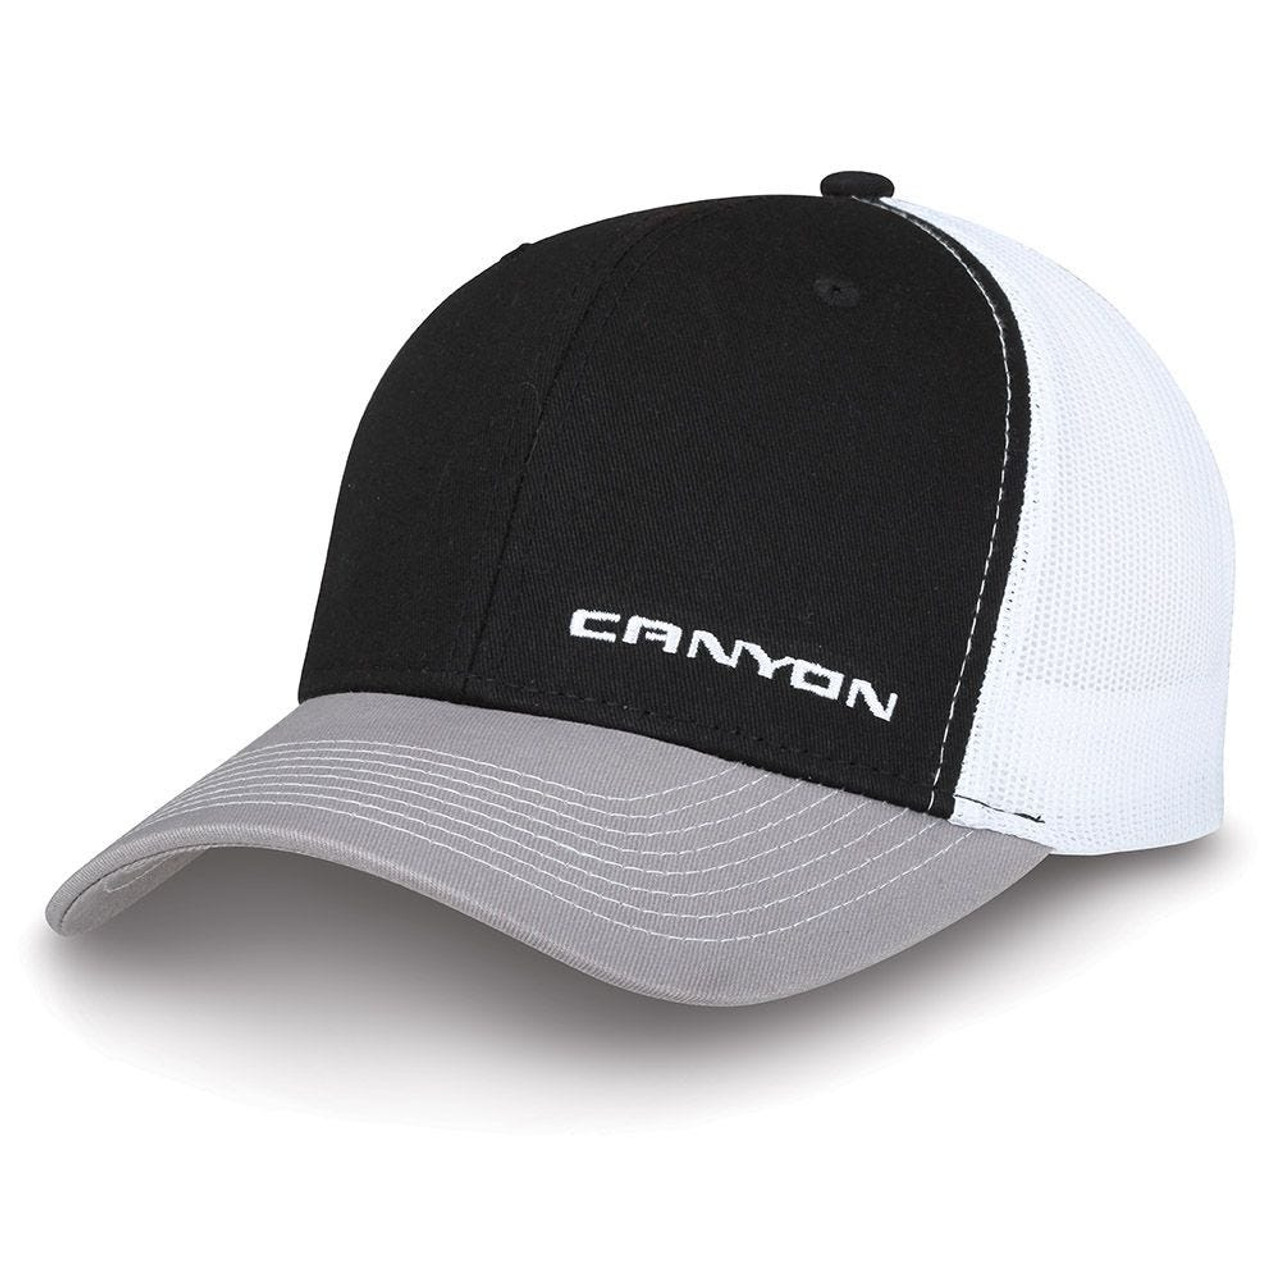 GMC Canyon Gray, Black and White Mesh Hat